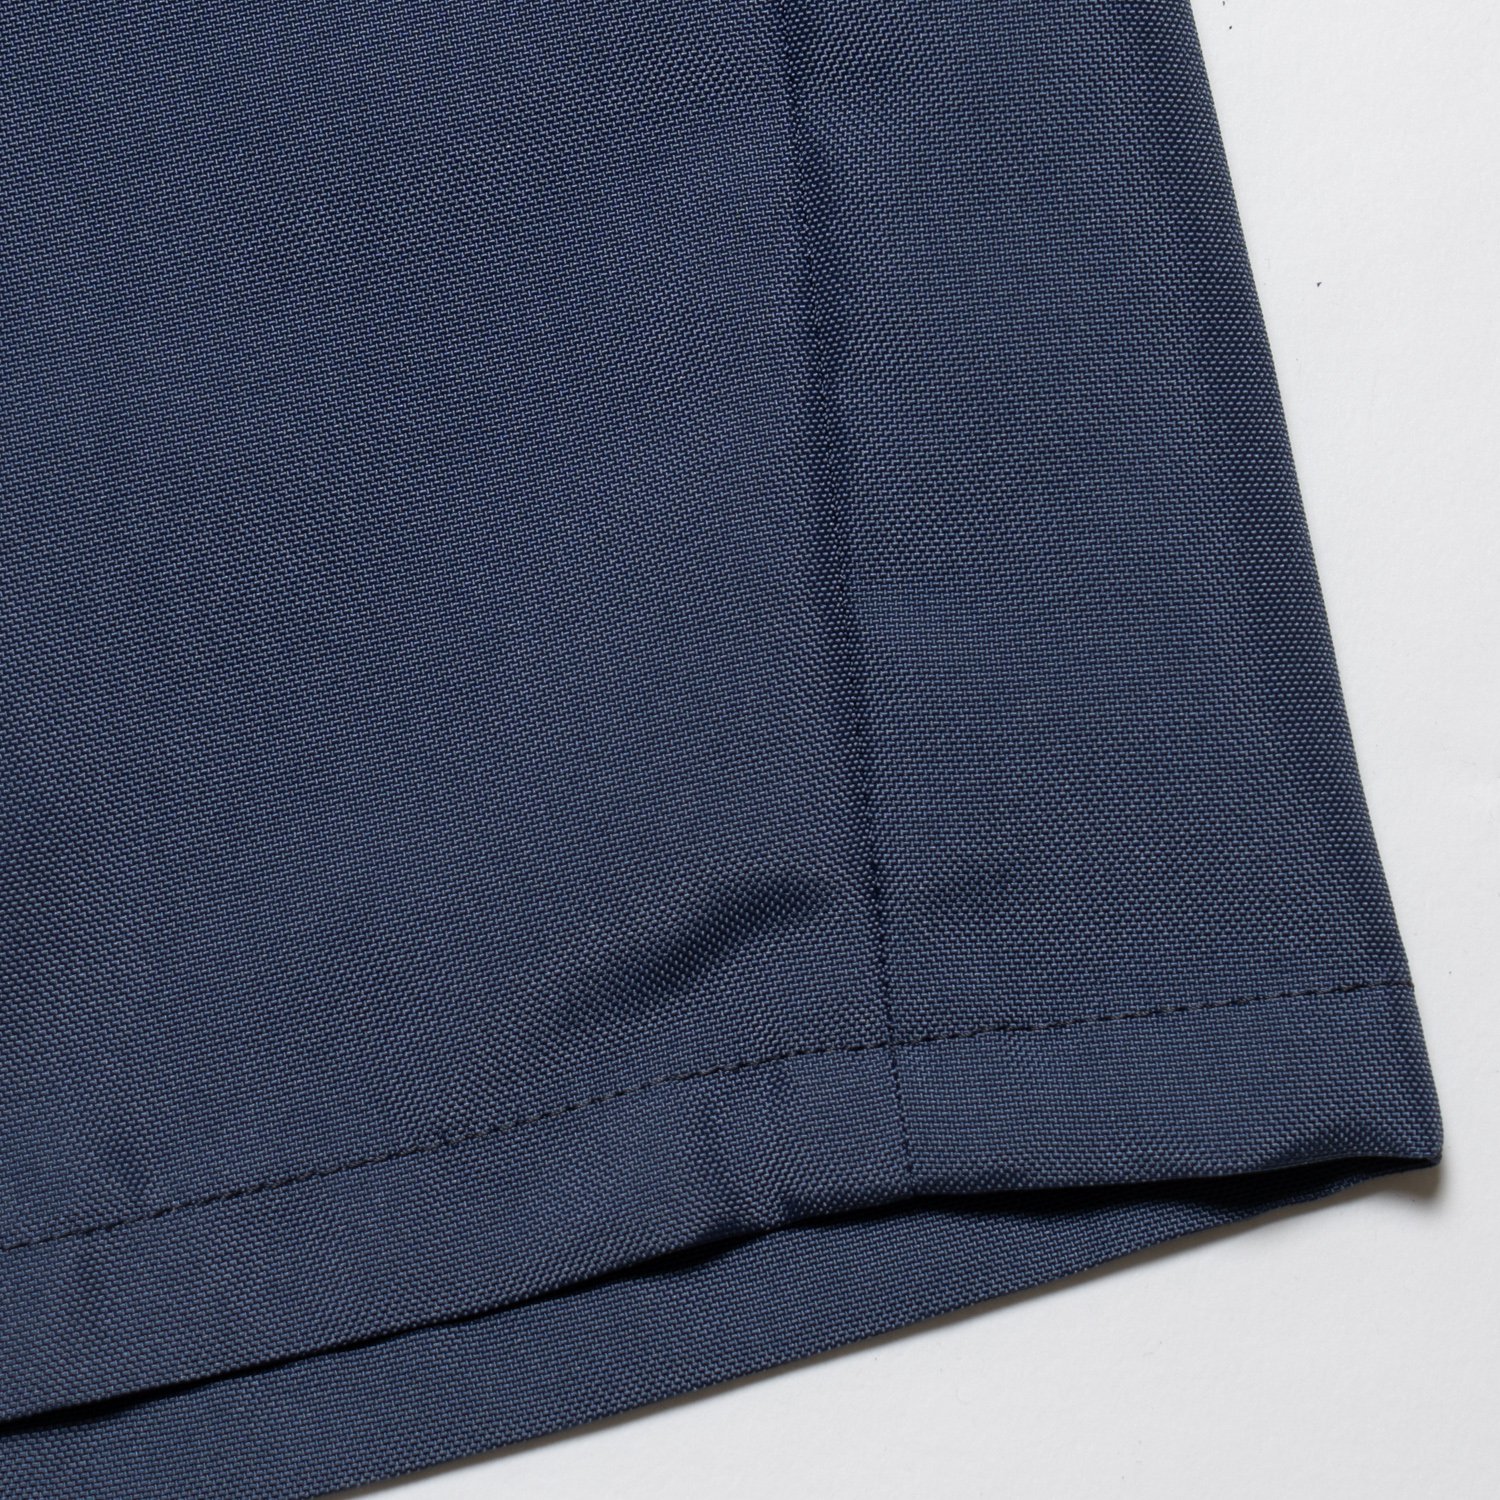 TUKI * 0164 5pocket Shorts Polyester Canvas * Blue Gray